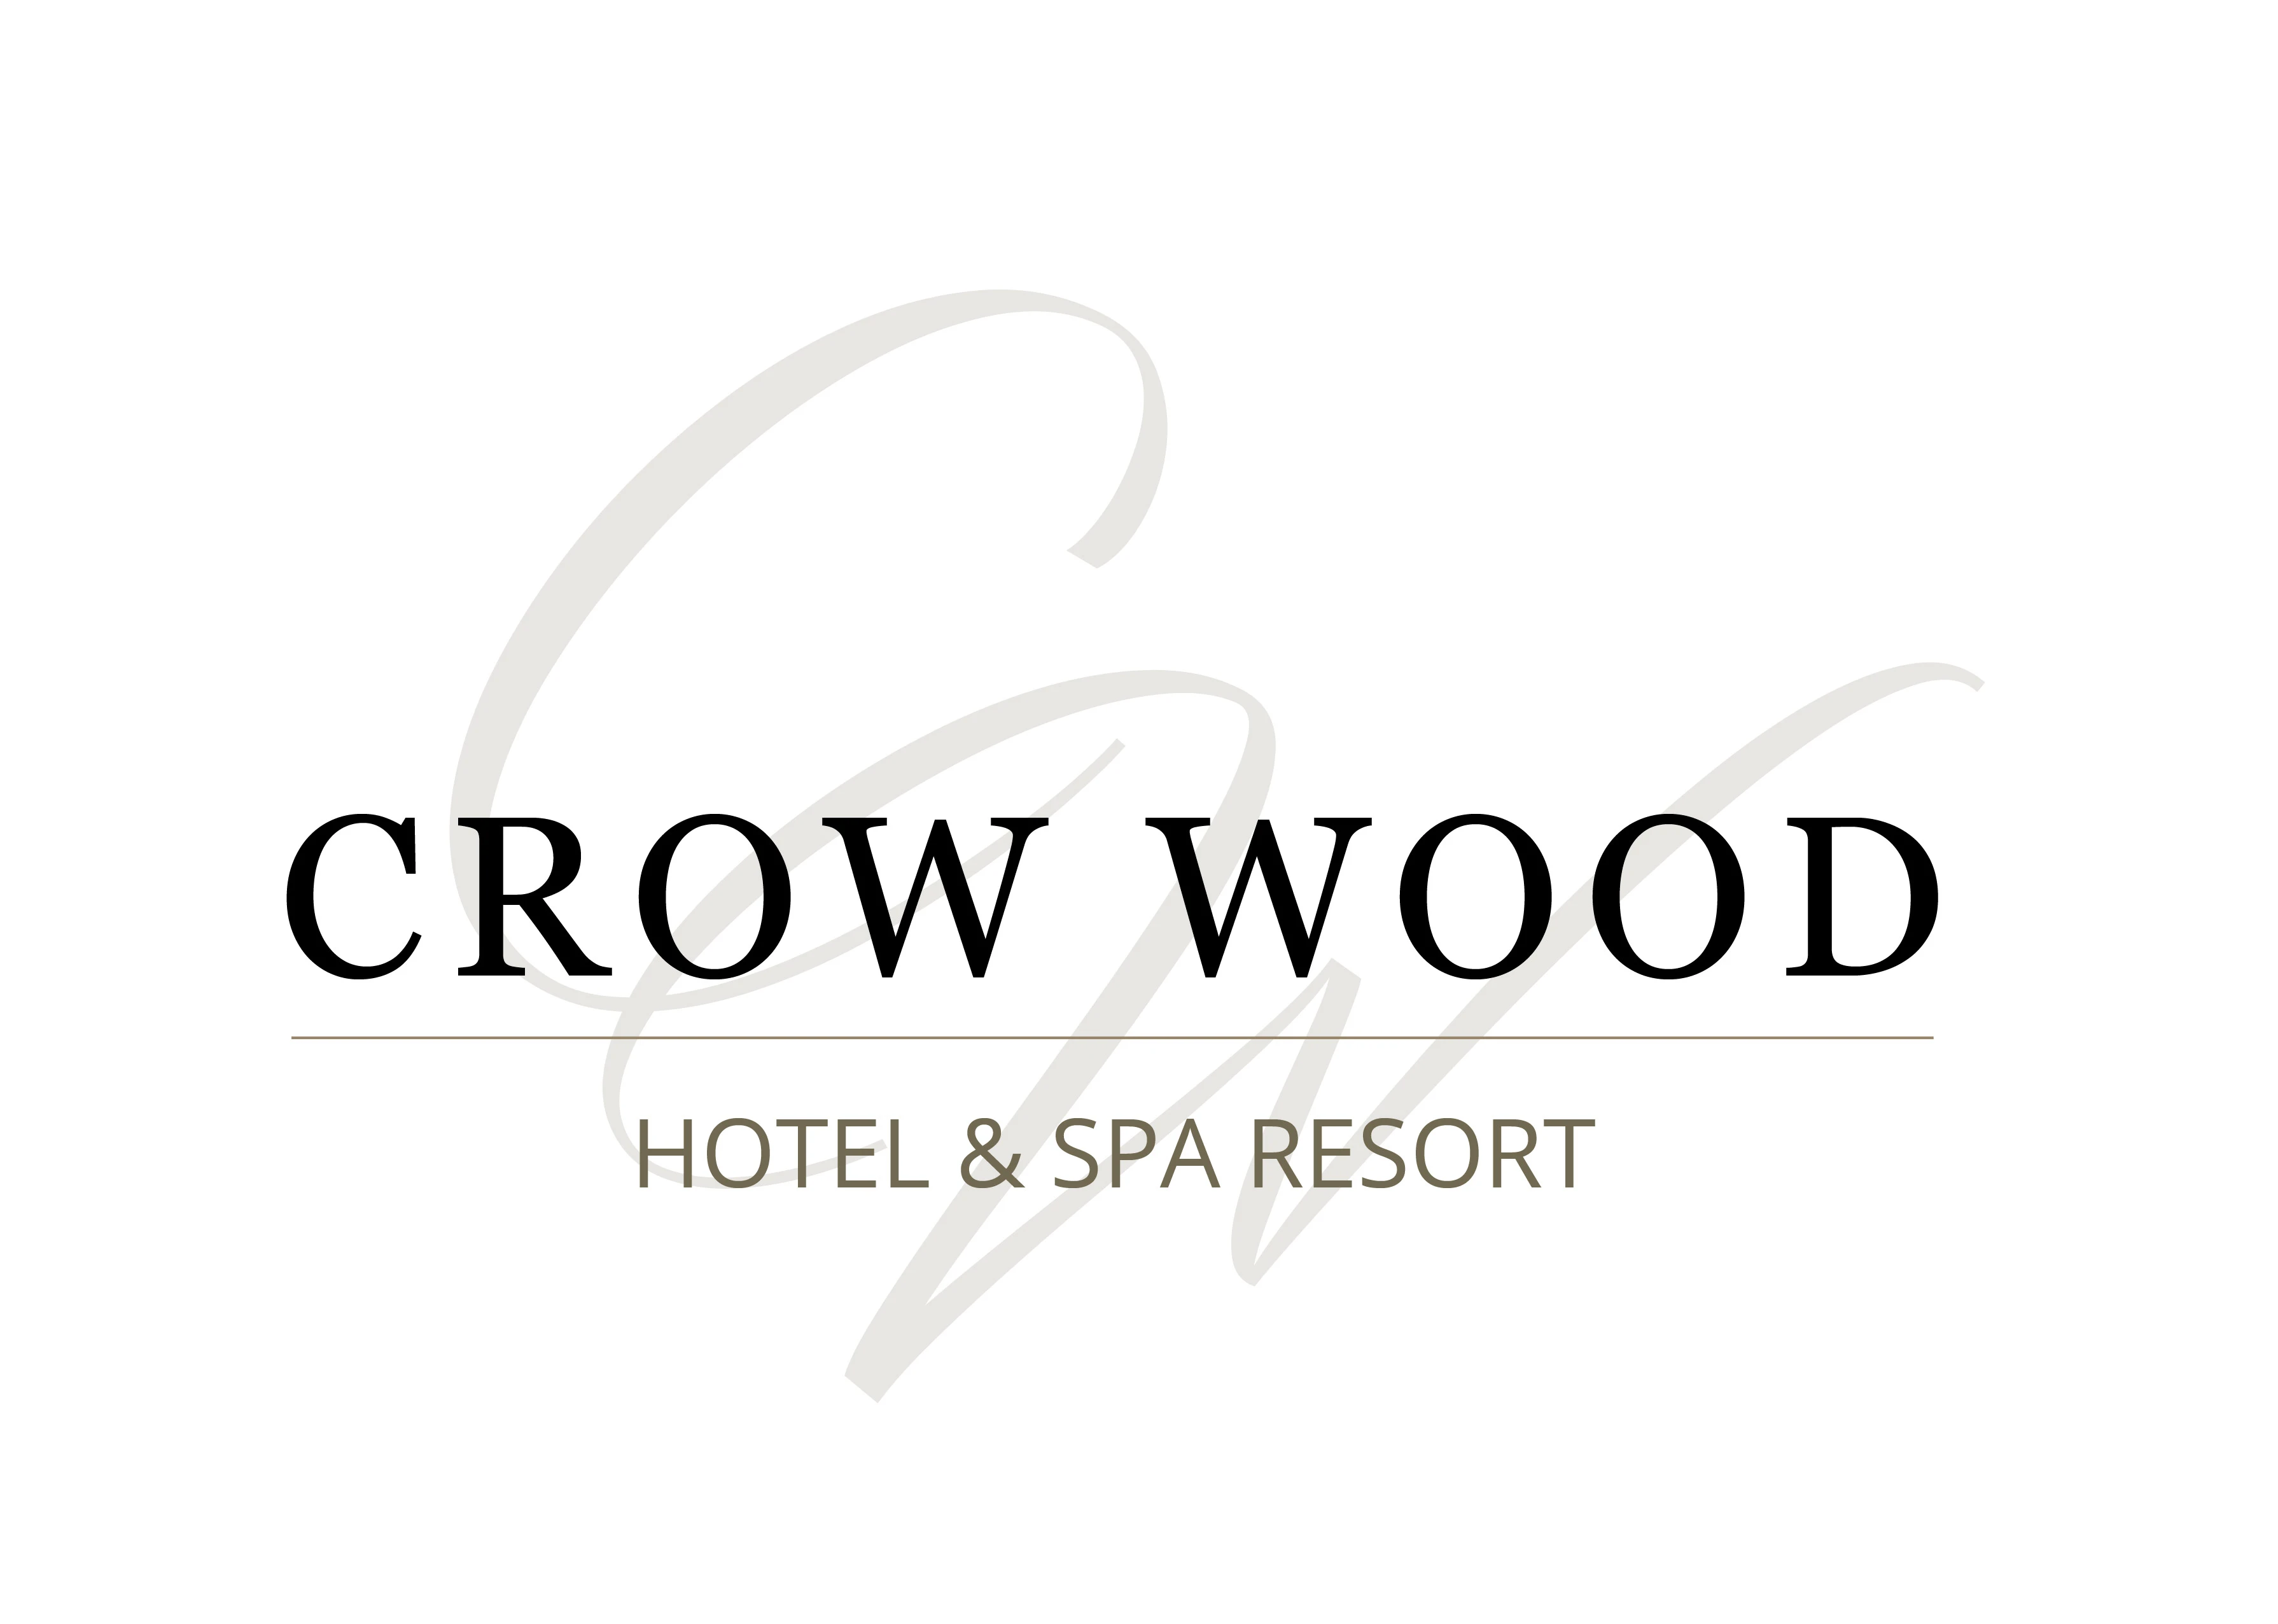 Crow Wood Hotel & Spa Resort Logo